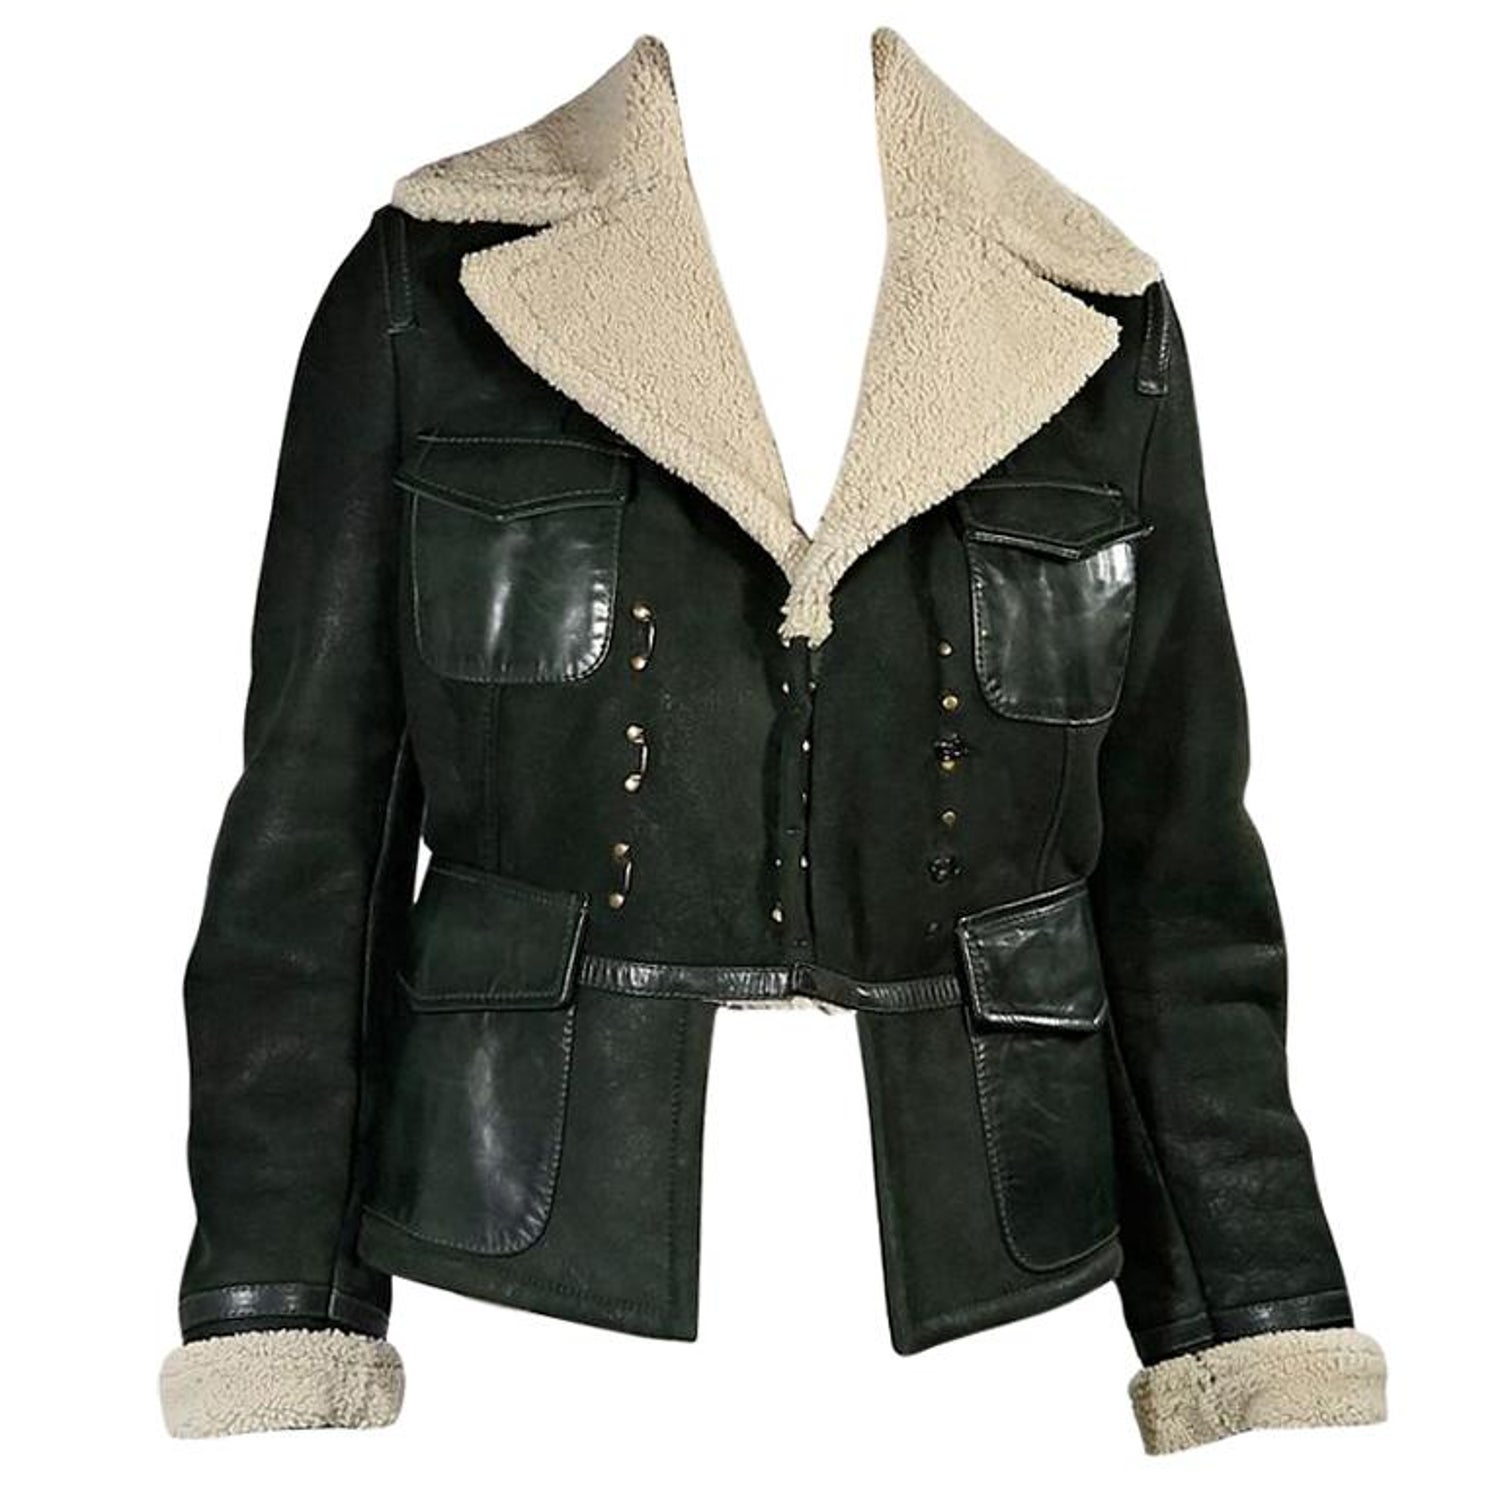 Fur Dsquared2 - For Sale on 1stDibs  dsquared2 fur, vengeance78 puffer  jacket, murmansky fur